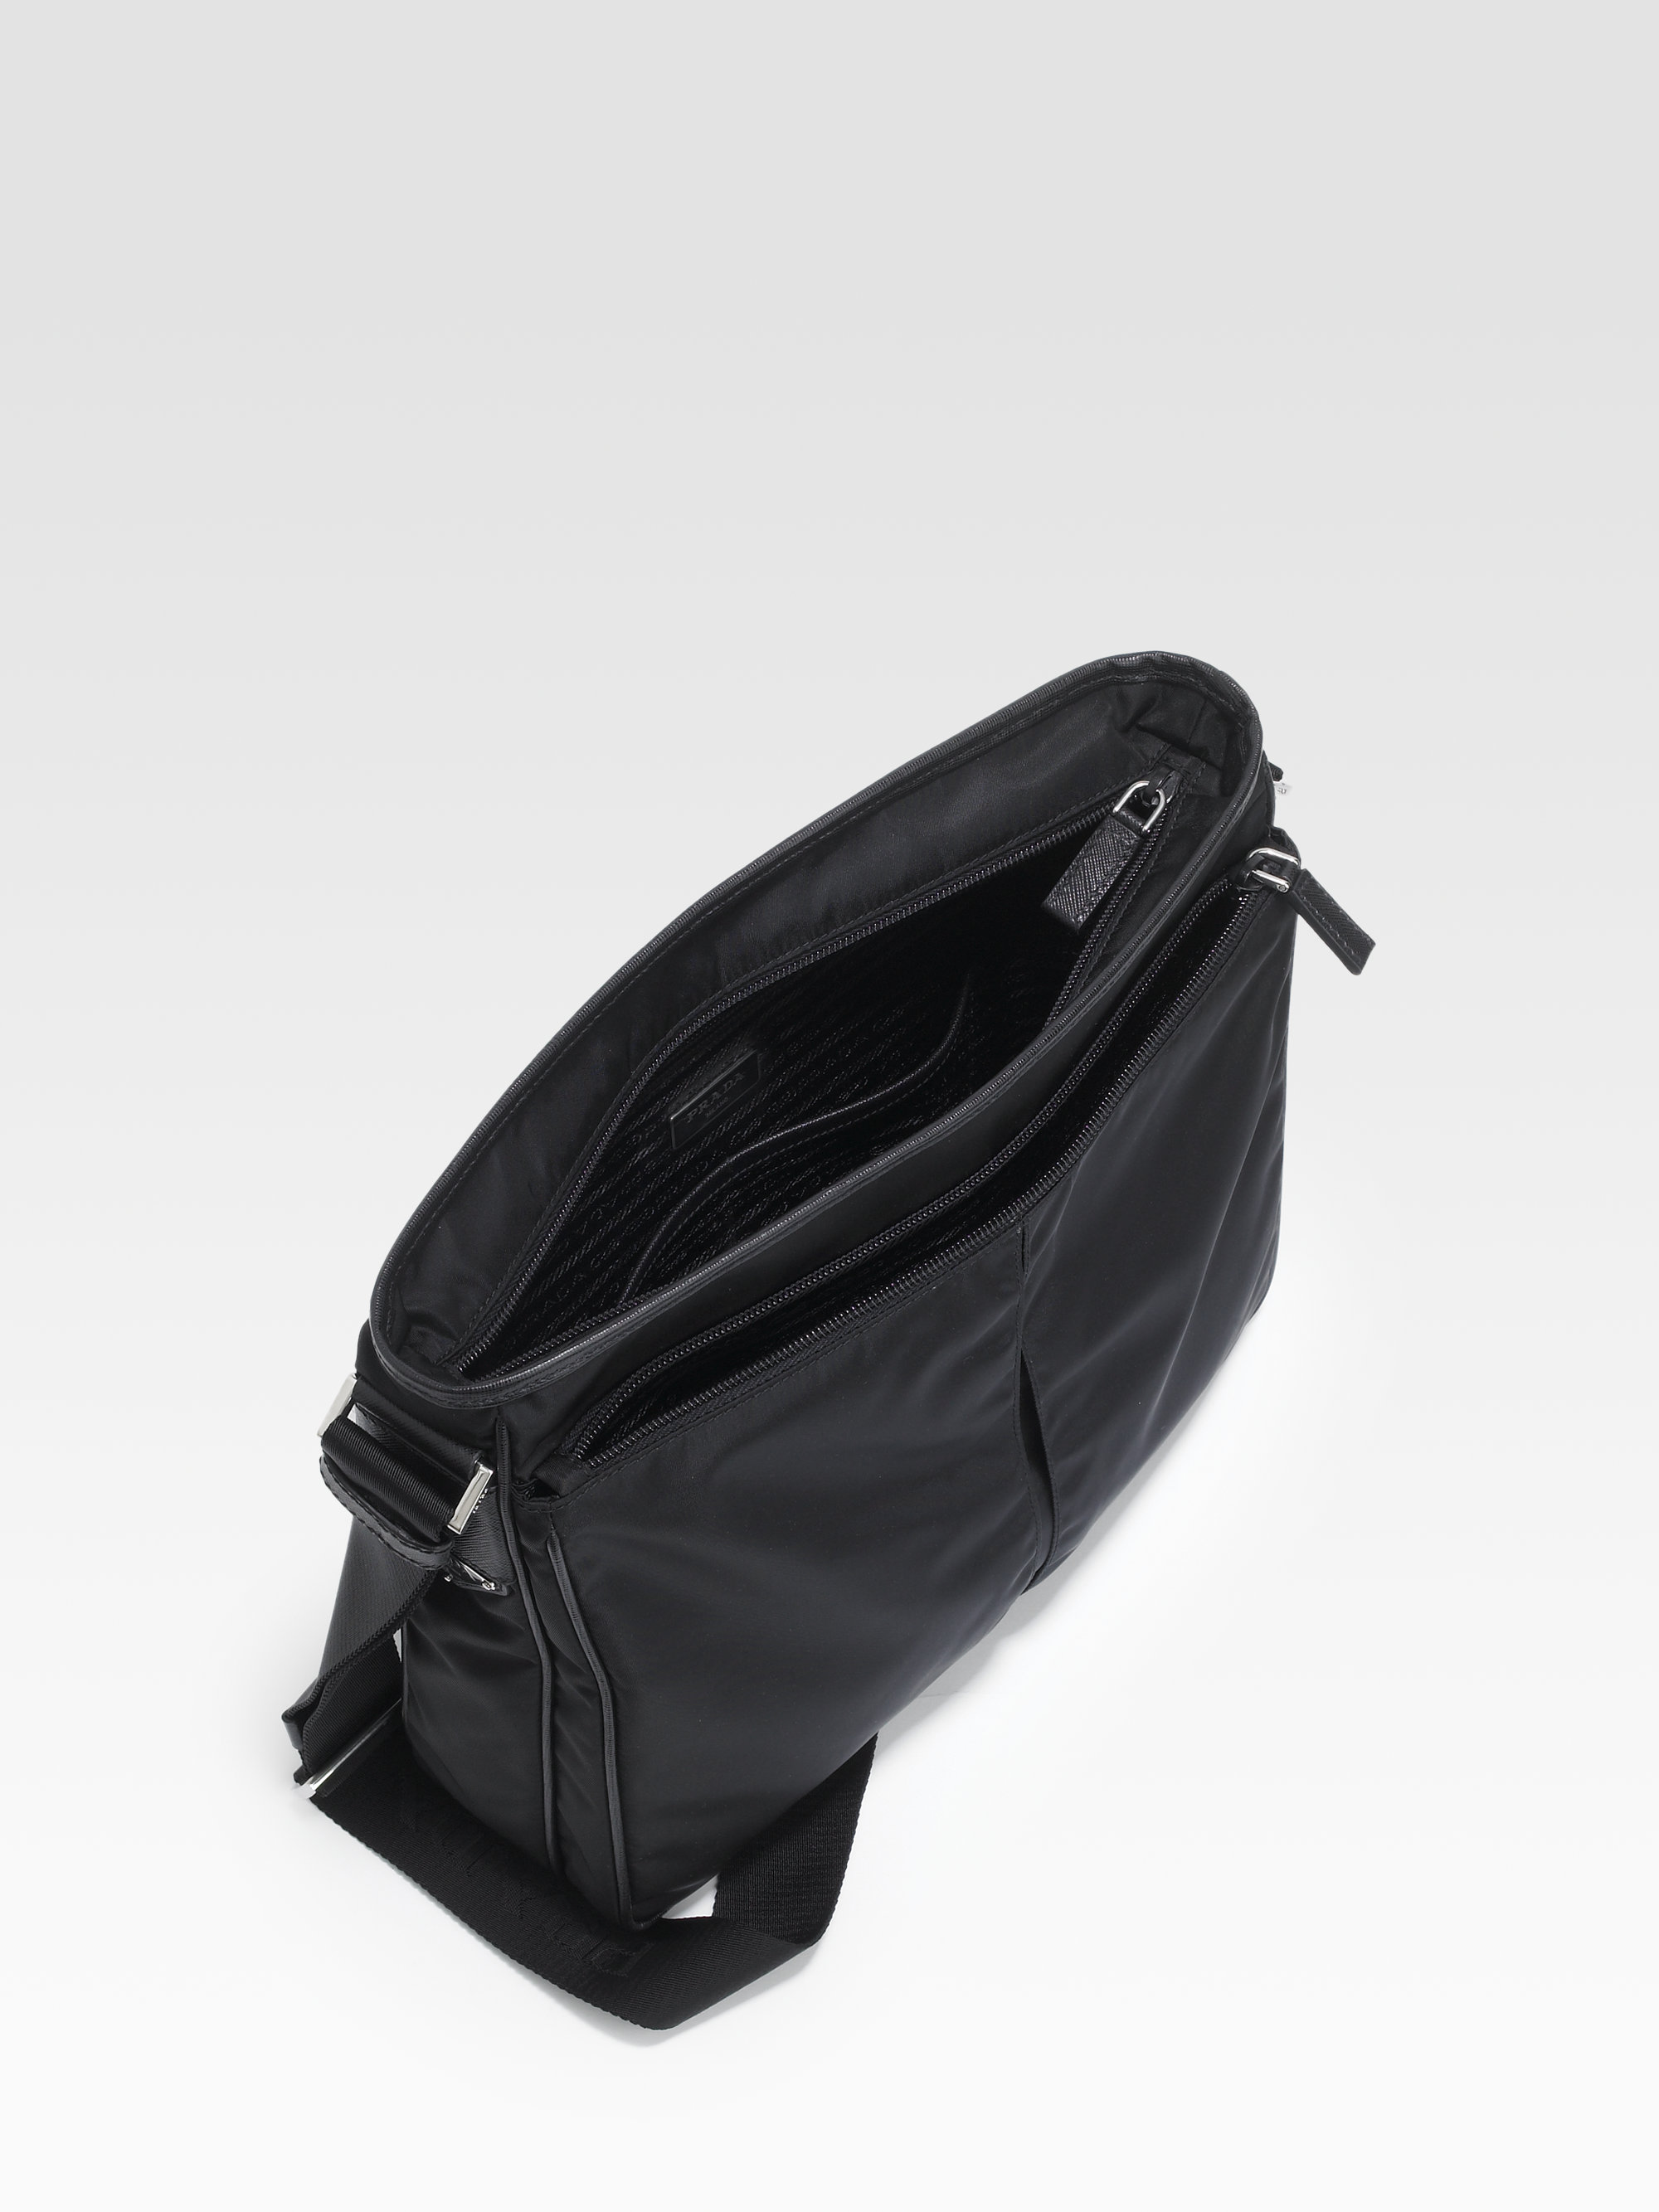 Prada Nylon Large Crossbody Bag in Black for Men - Lyst